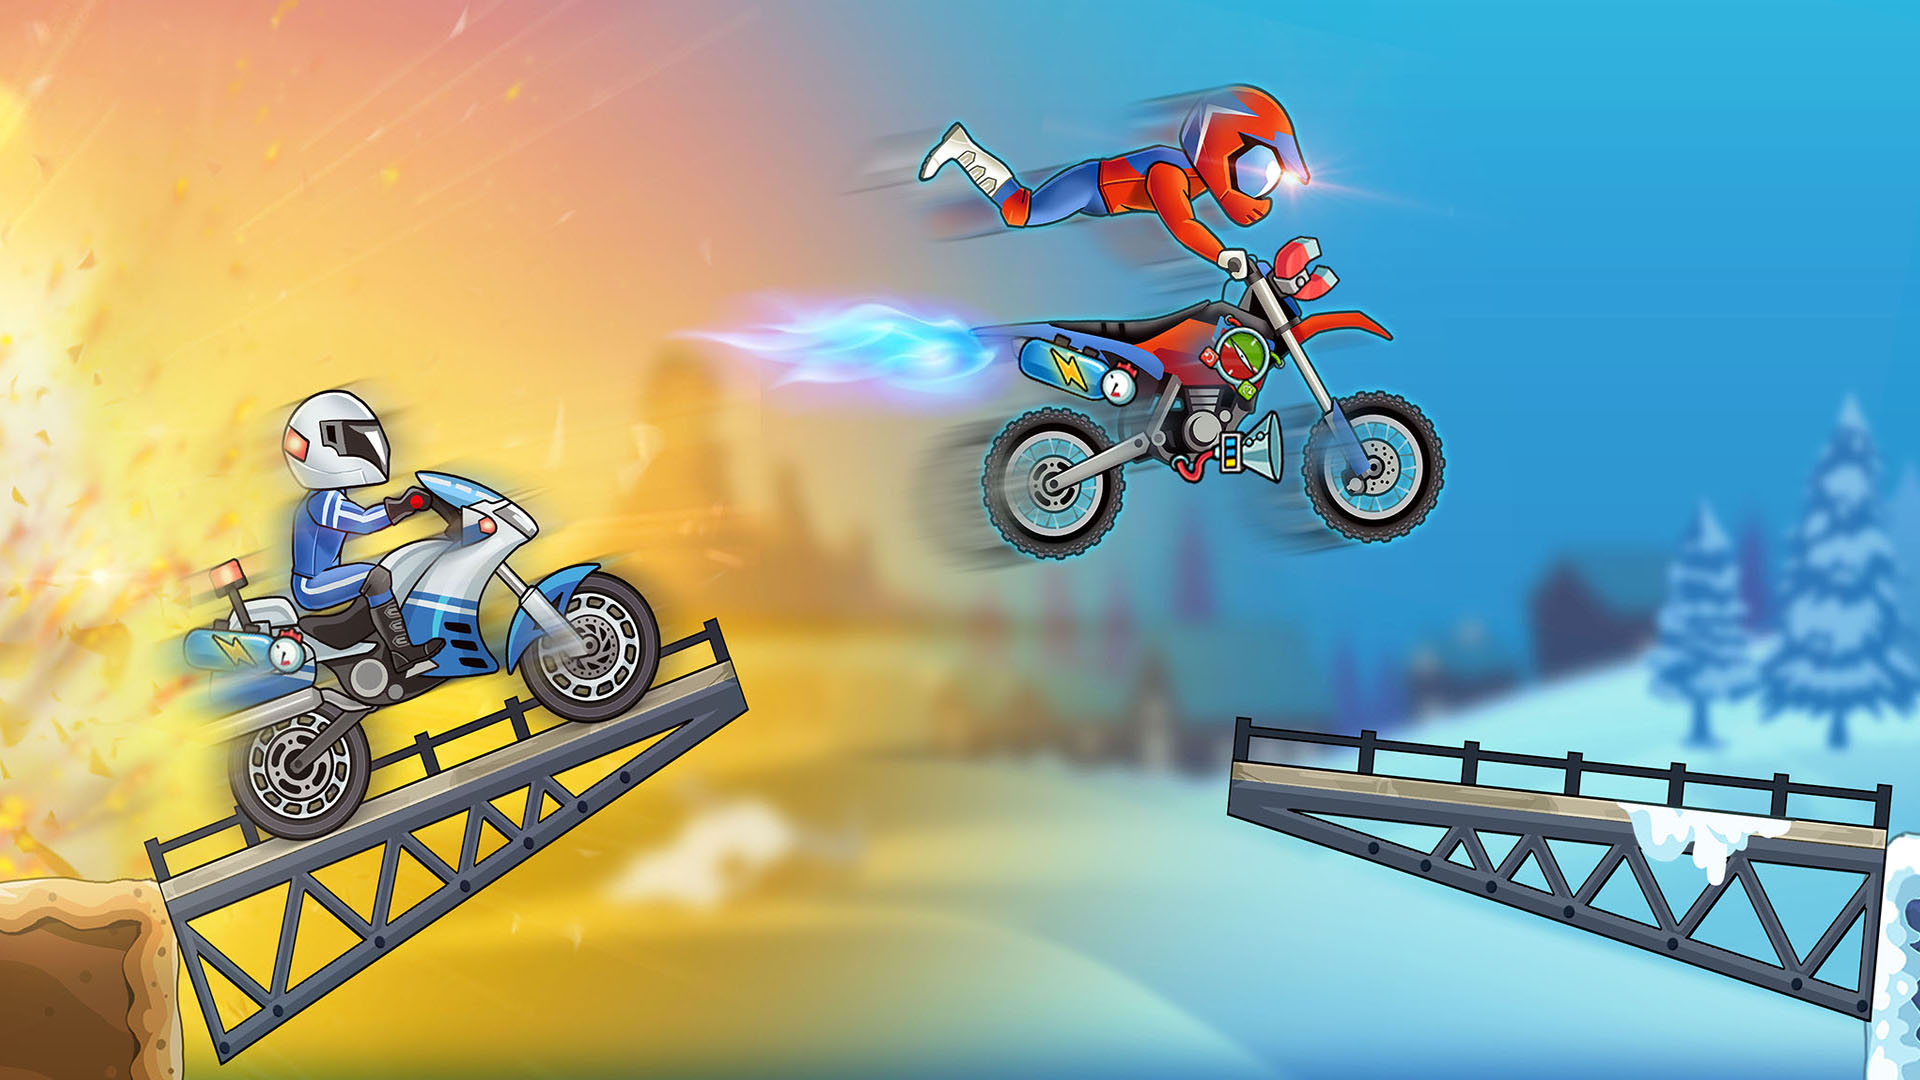 Download Turbo Bike: Extreme Racing für Android kostenlos.